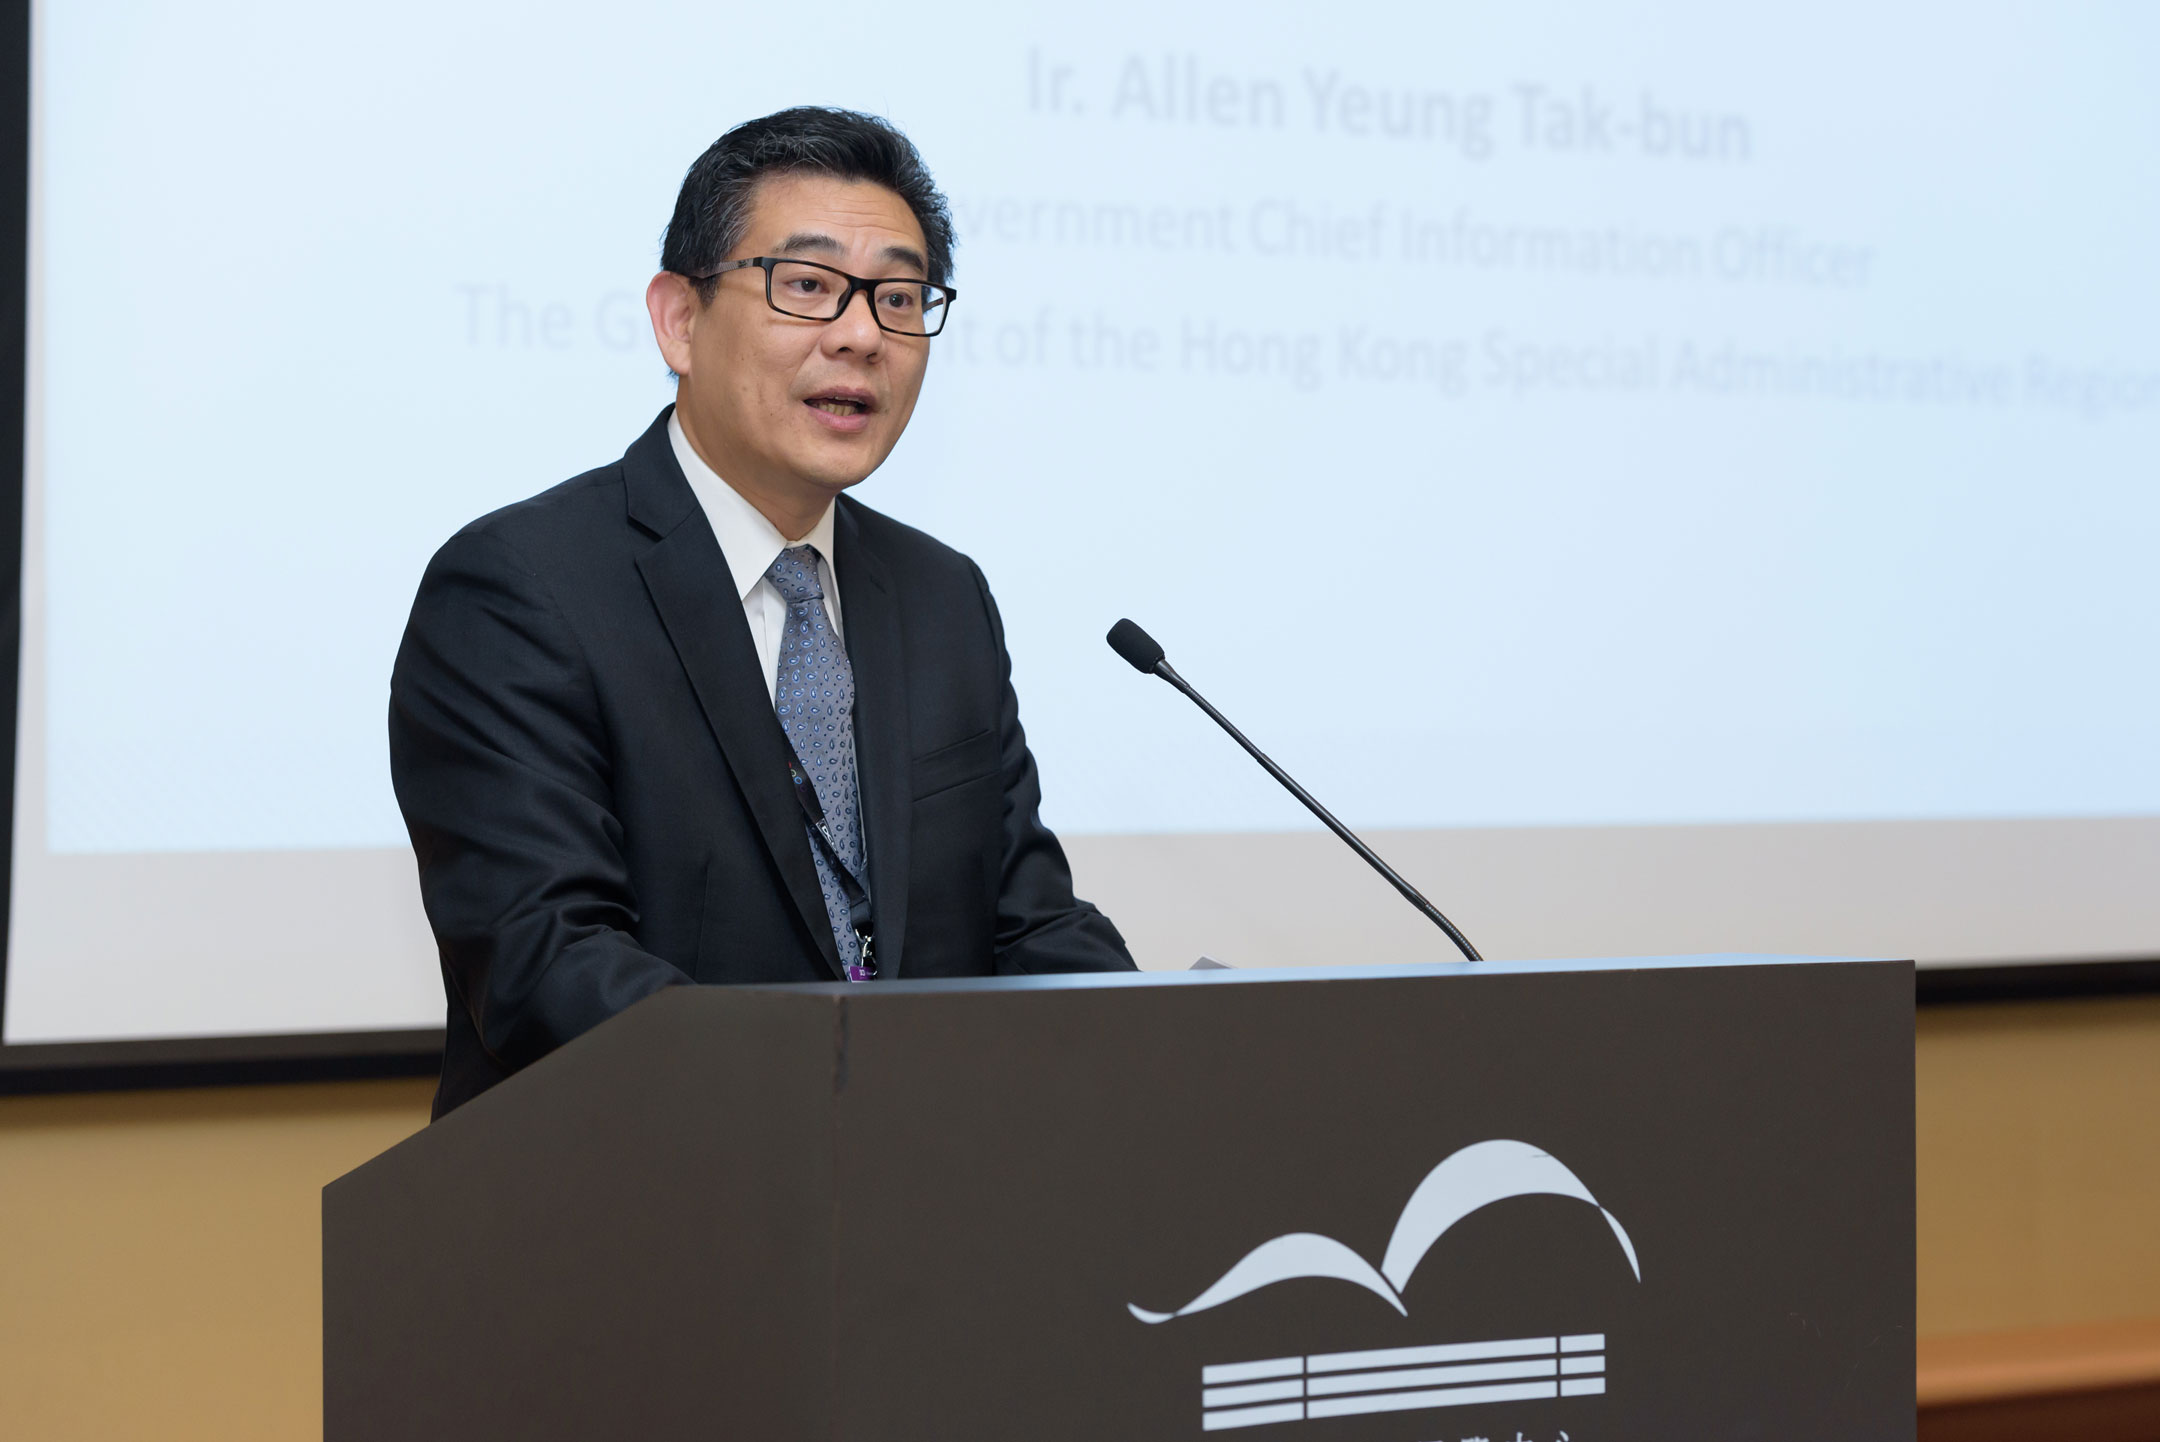 Ir Allen Yeung, JP, Government Chief Information Officer, at the "DCD Converged Hong Kong 2017”